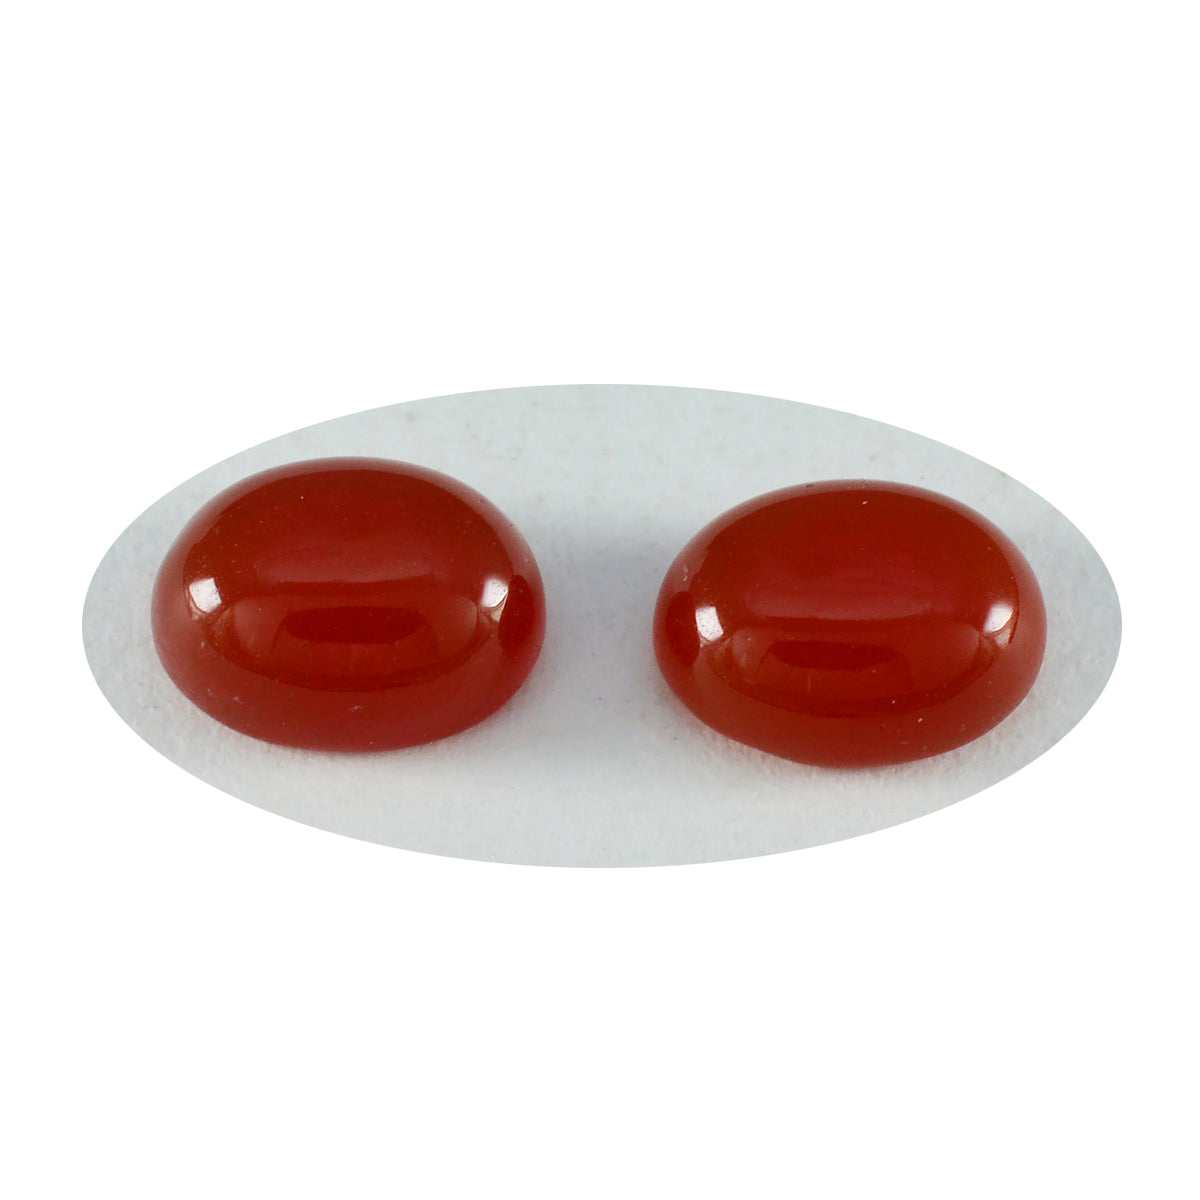 Riyogems 1PC Red Onyx Cabochon 10x14 mm Oval Shape Nice Quality Gemstone